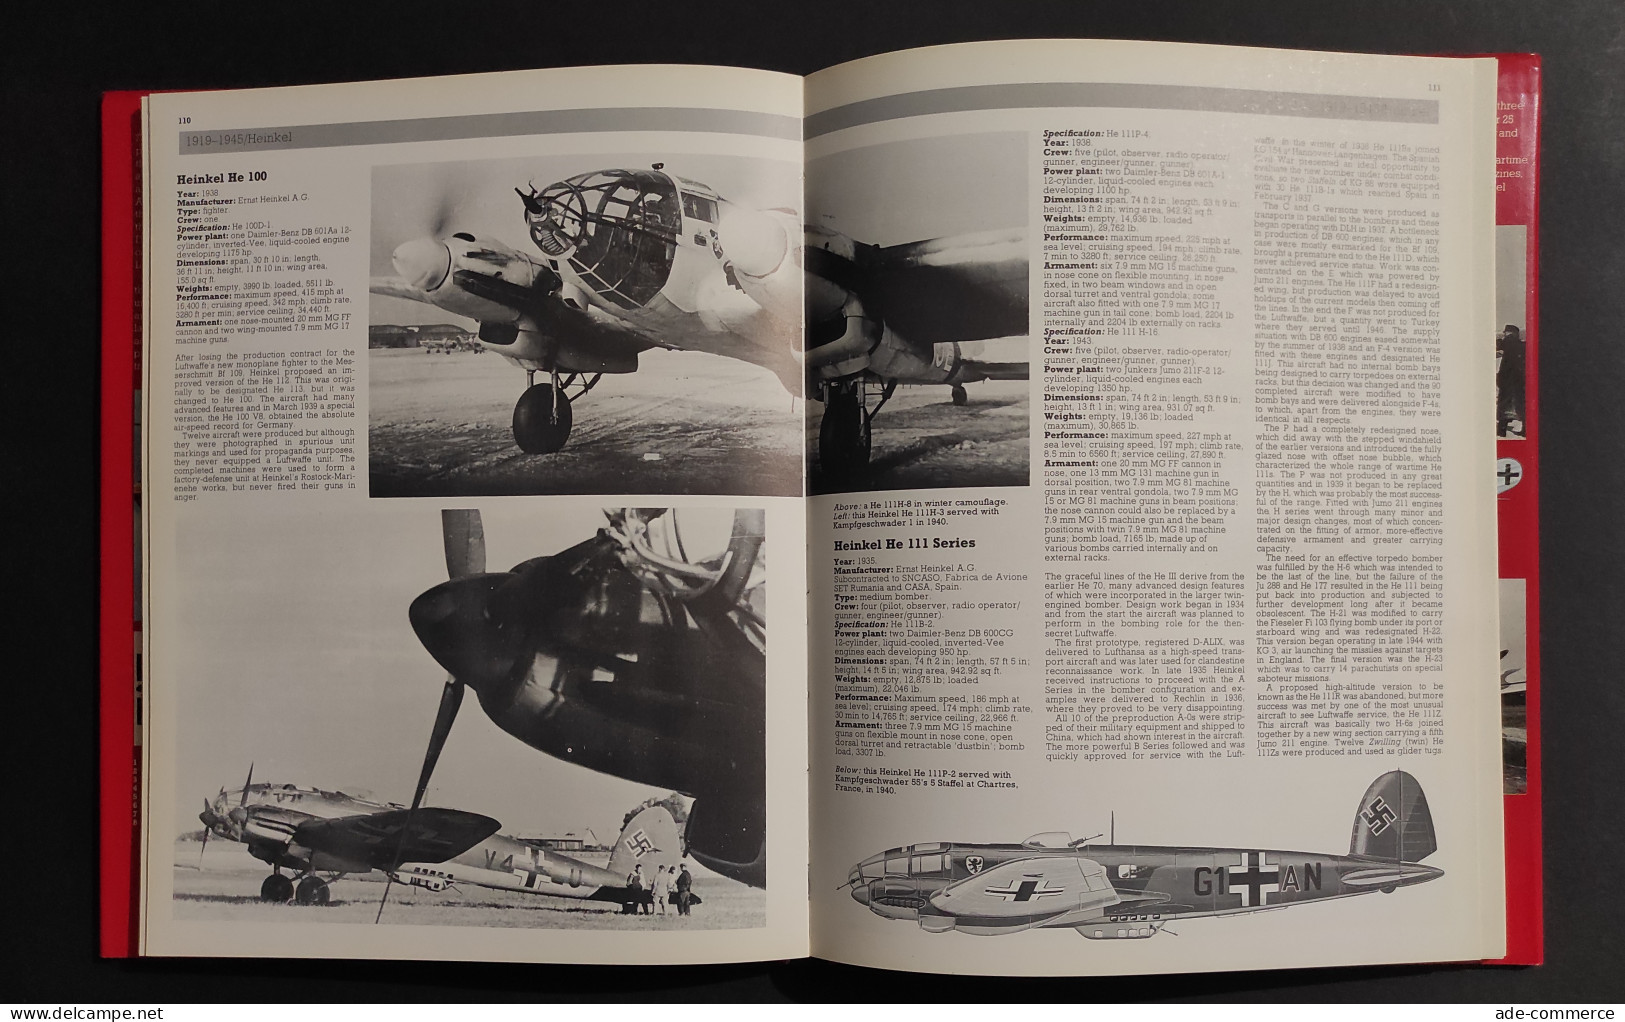 Encyclopedia German Military Aircraft - B. Philpott - Ed. Bison Books - Motoren